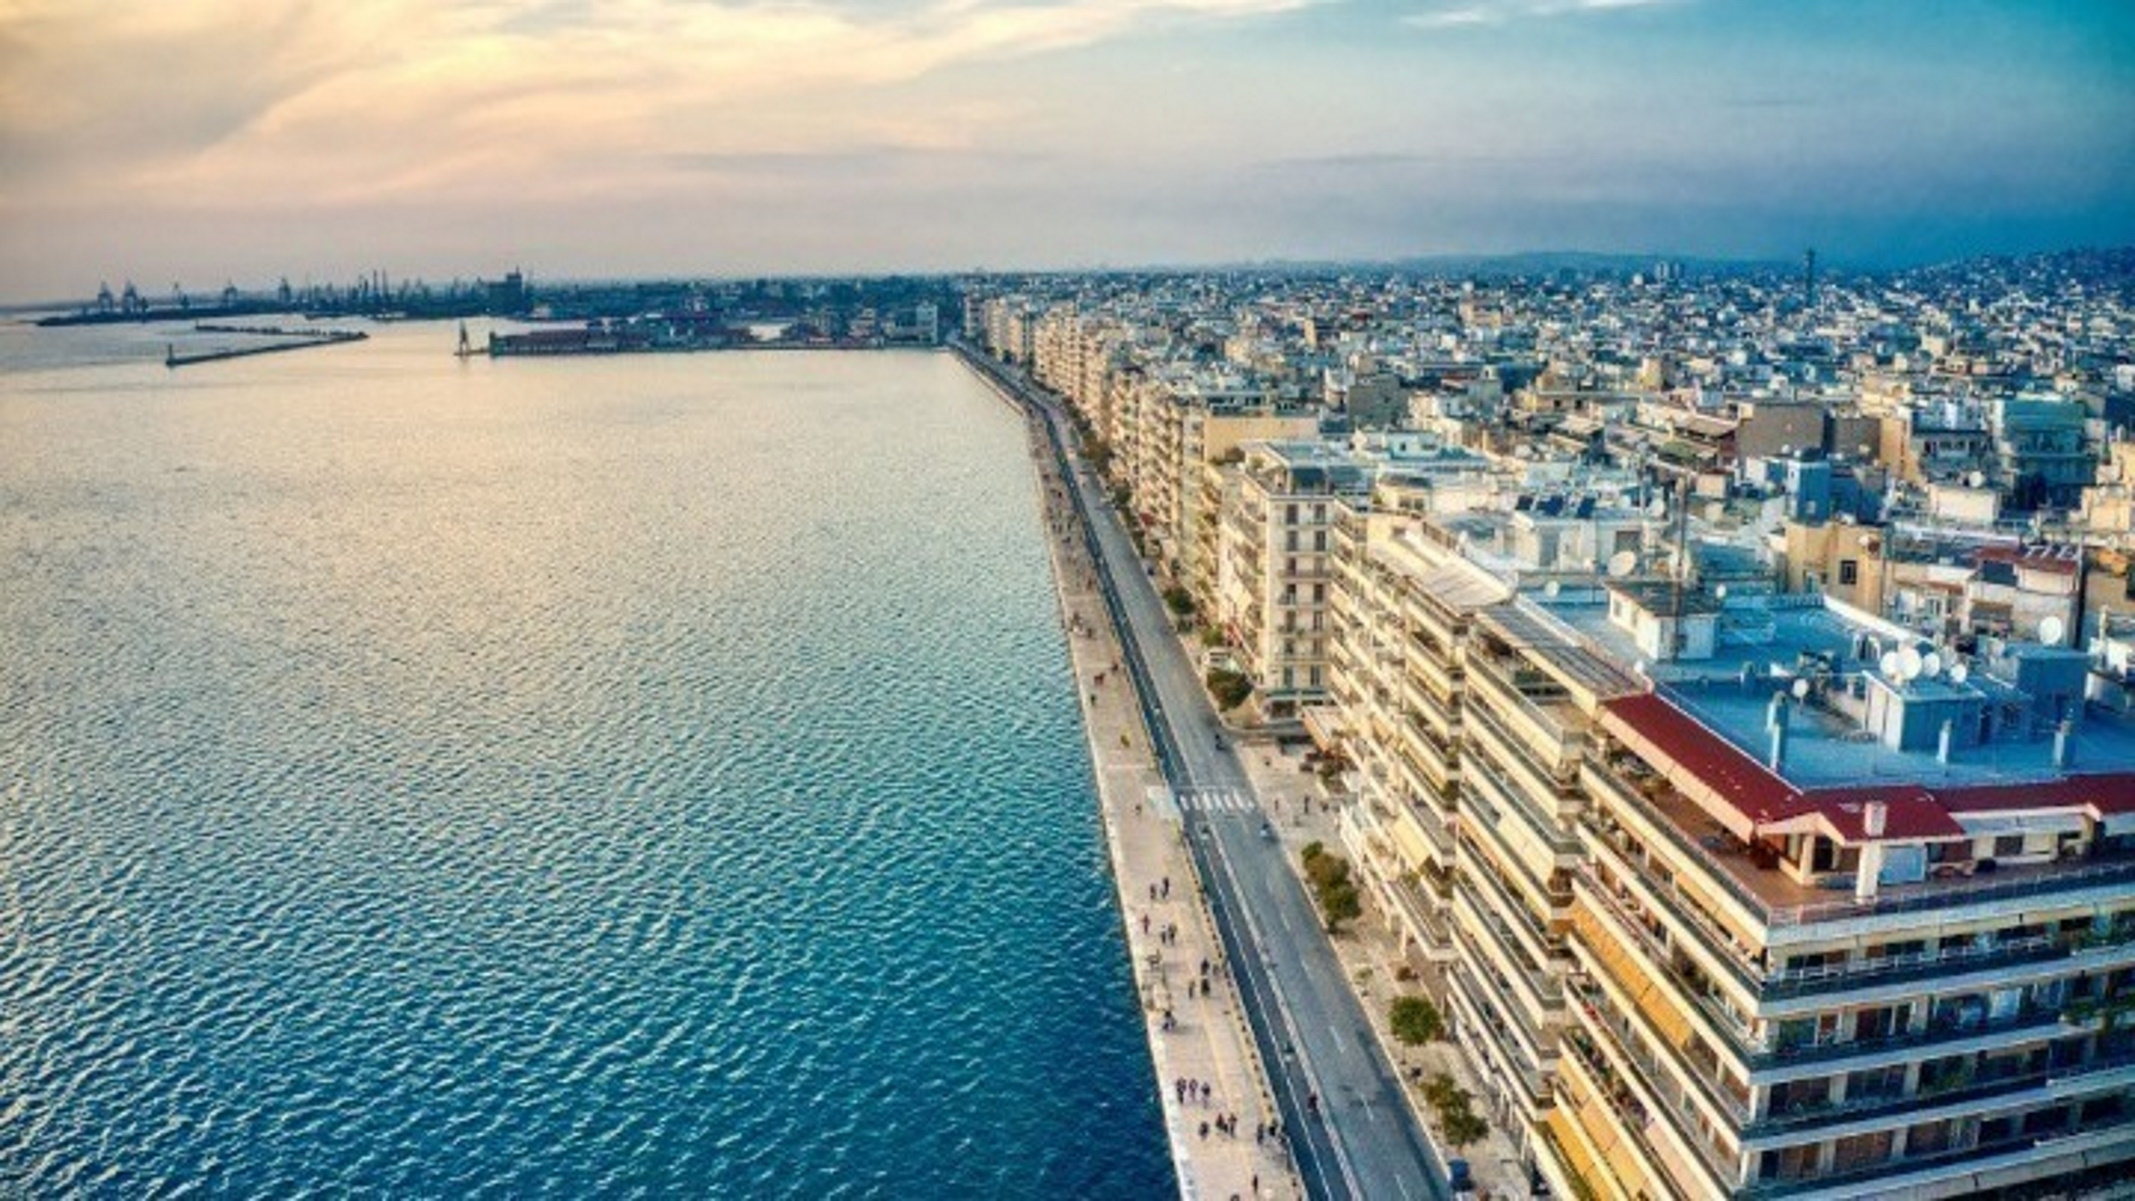 More information about "Ο χάρτης των τιμών γραφείων στη Θεσσαλονίκη"